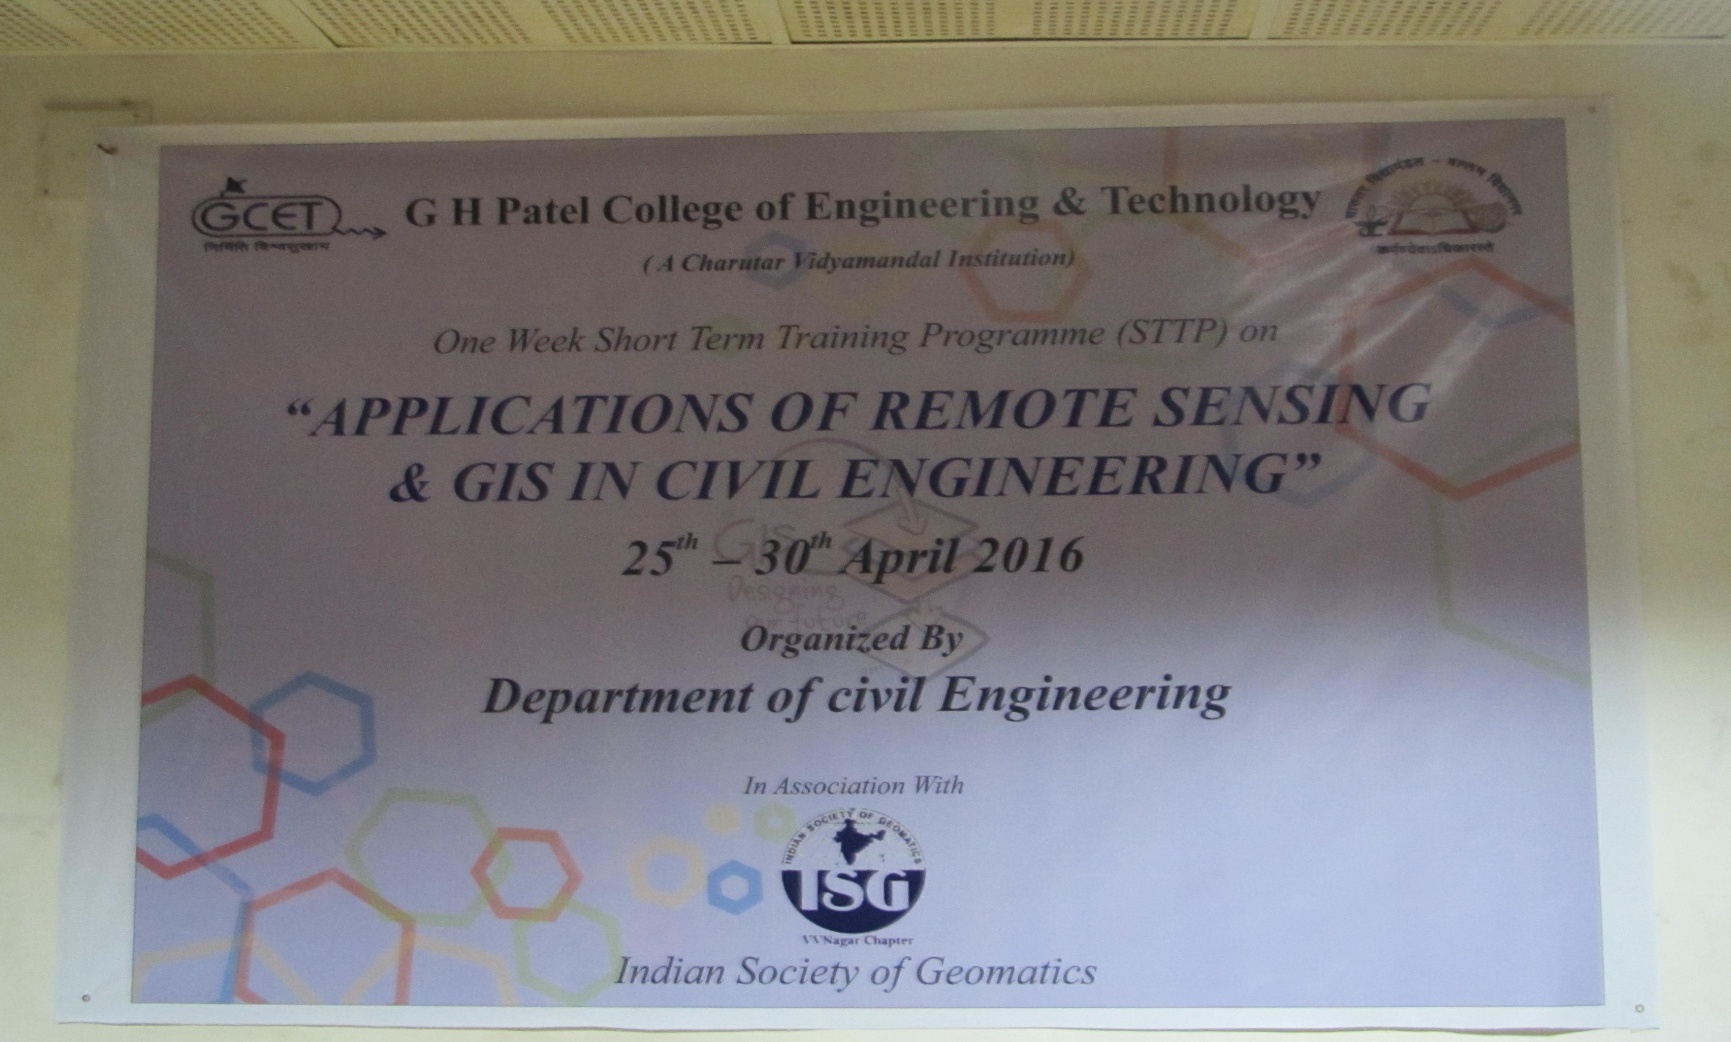 Applications of Remote Sensing & GIS in Civil Engineering